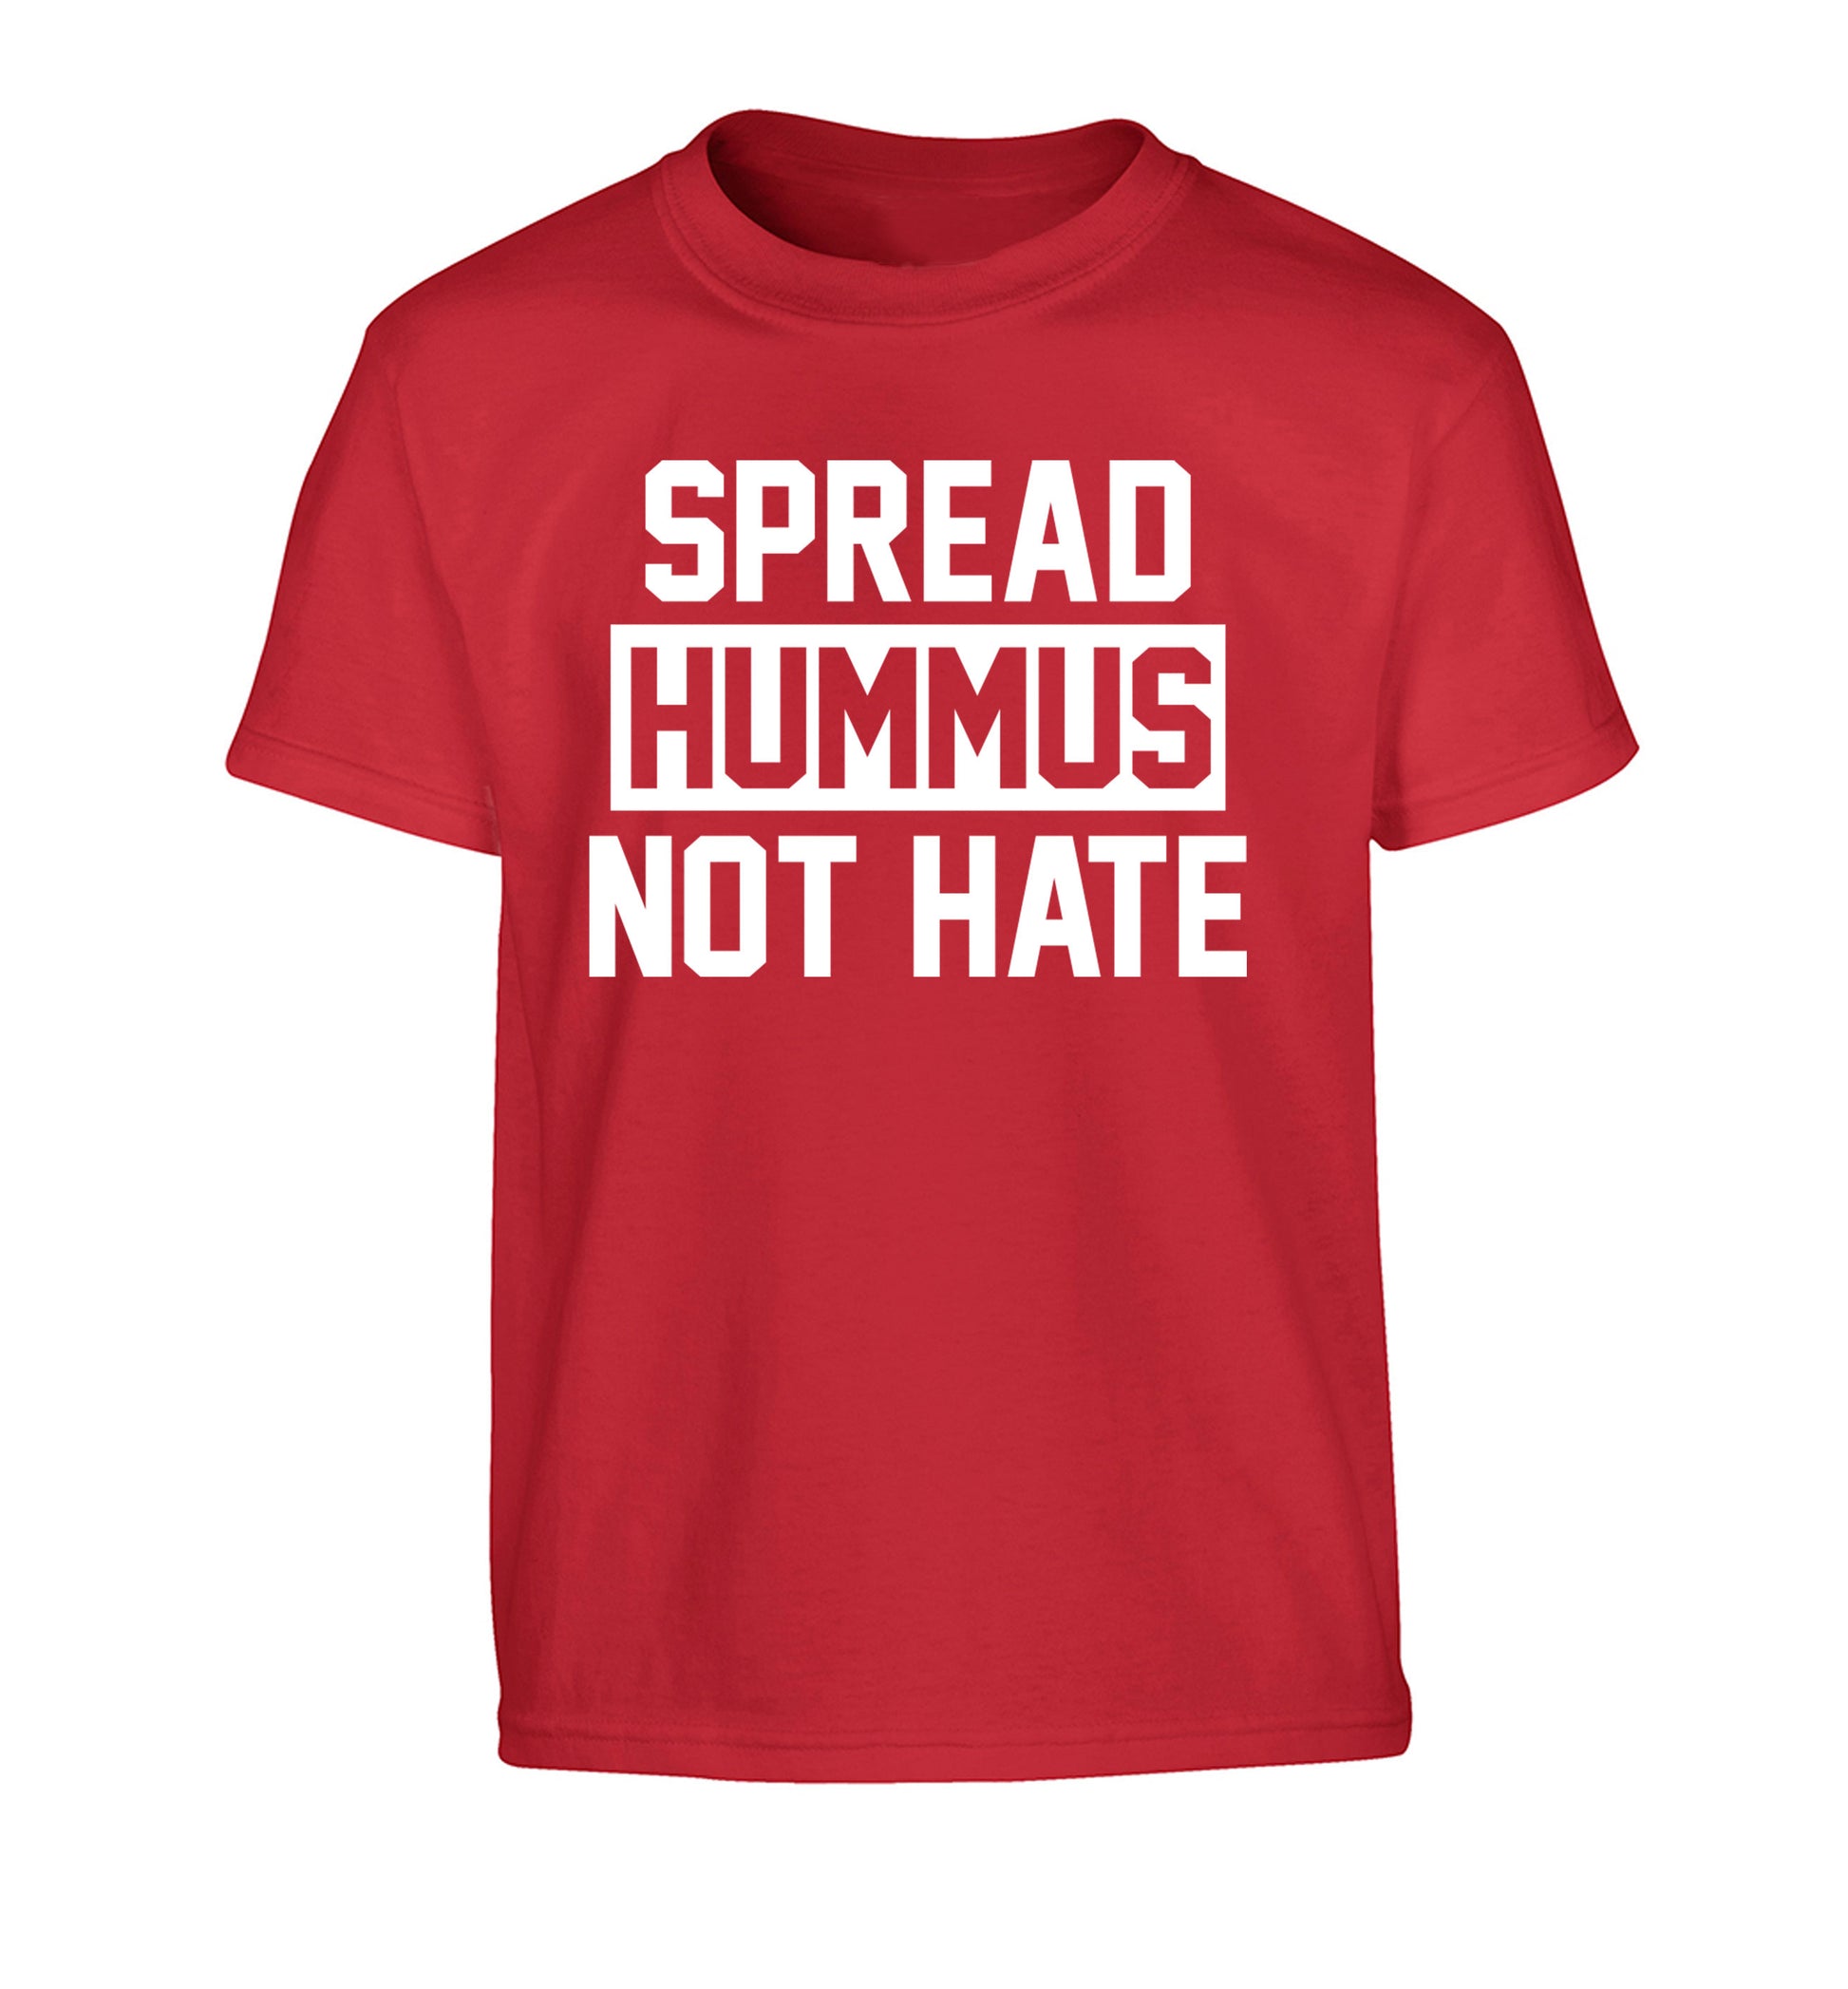 Spread hummus not hate Children's red Tshirt 12-14 Years